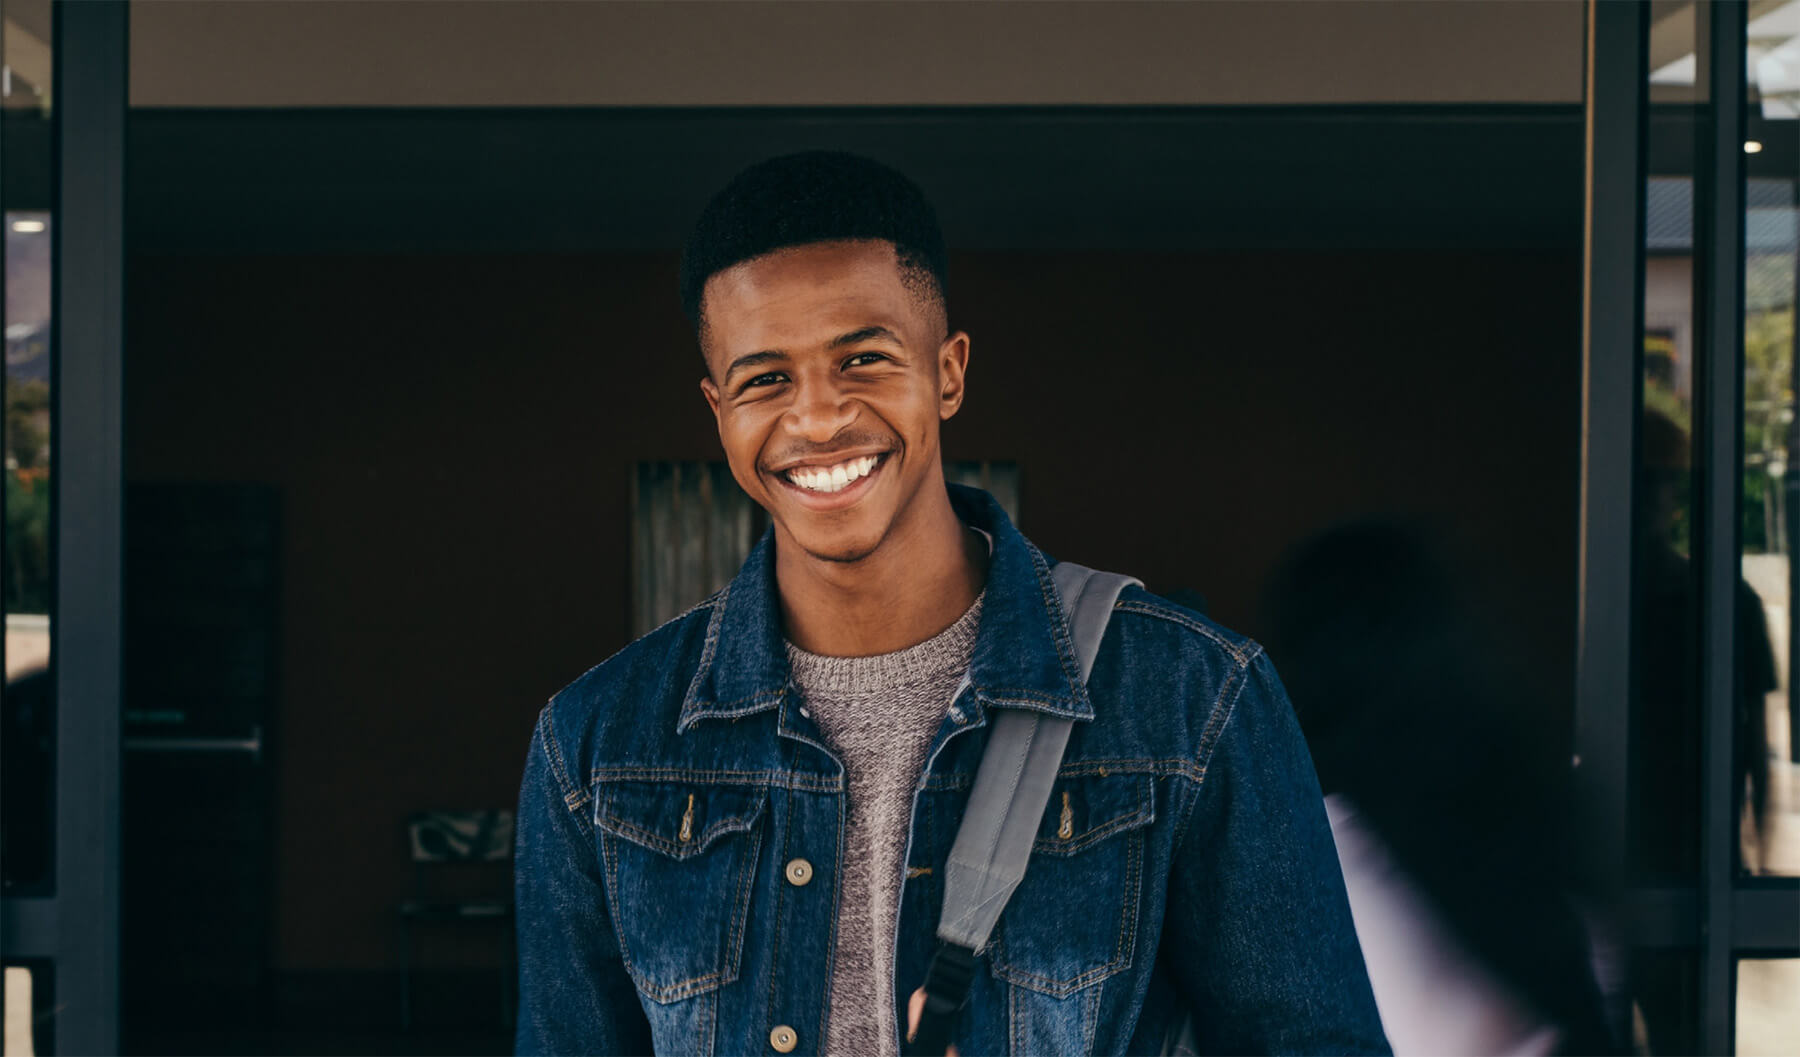 Black male student smiling in denim jacket